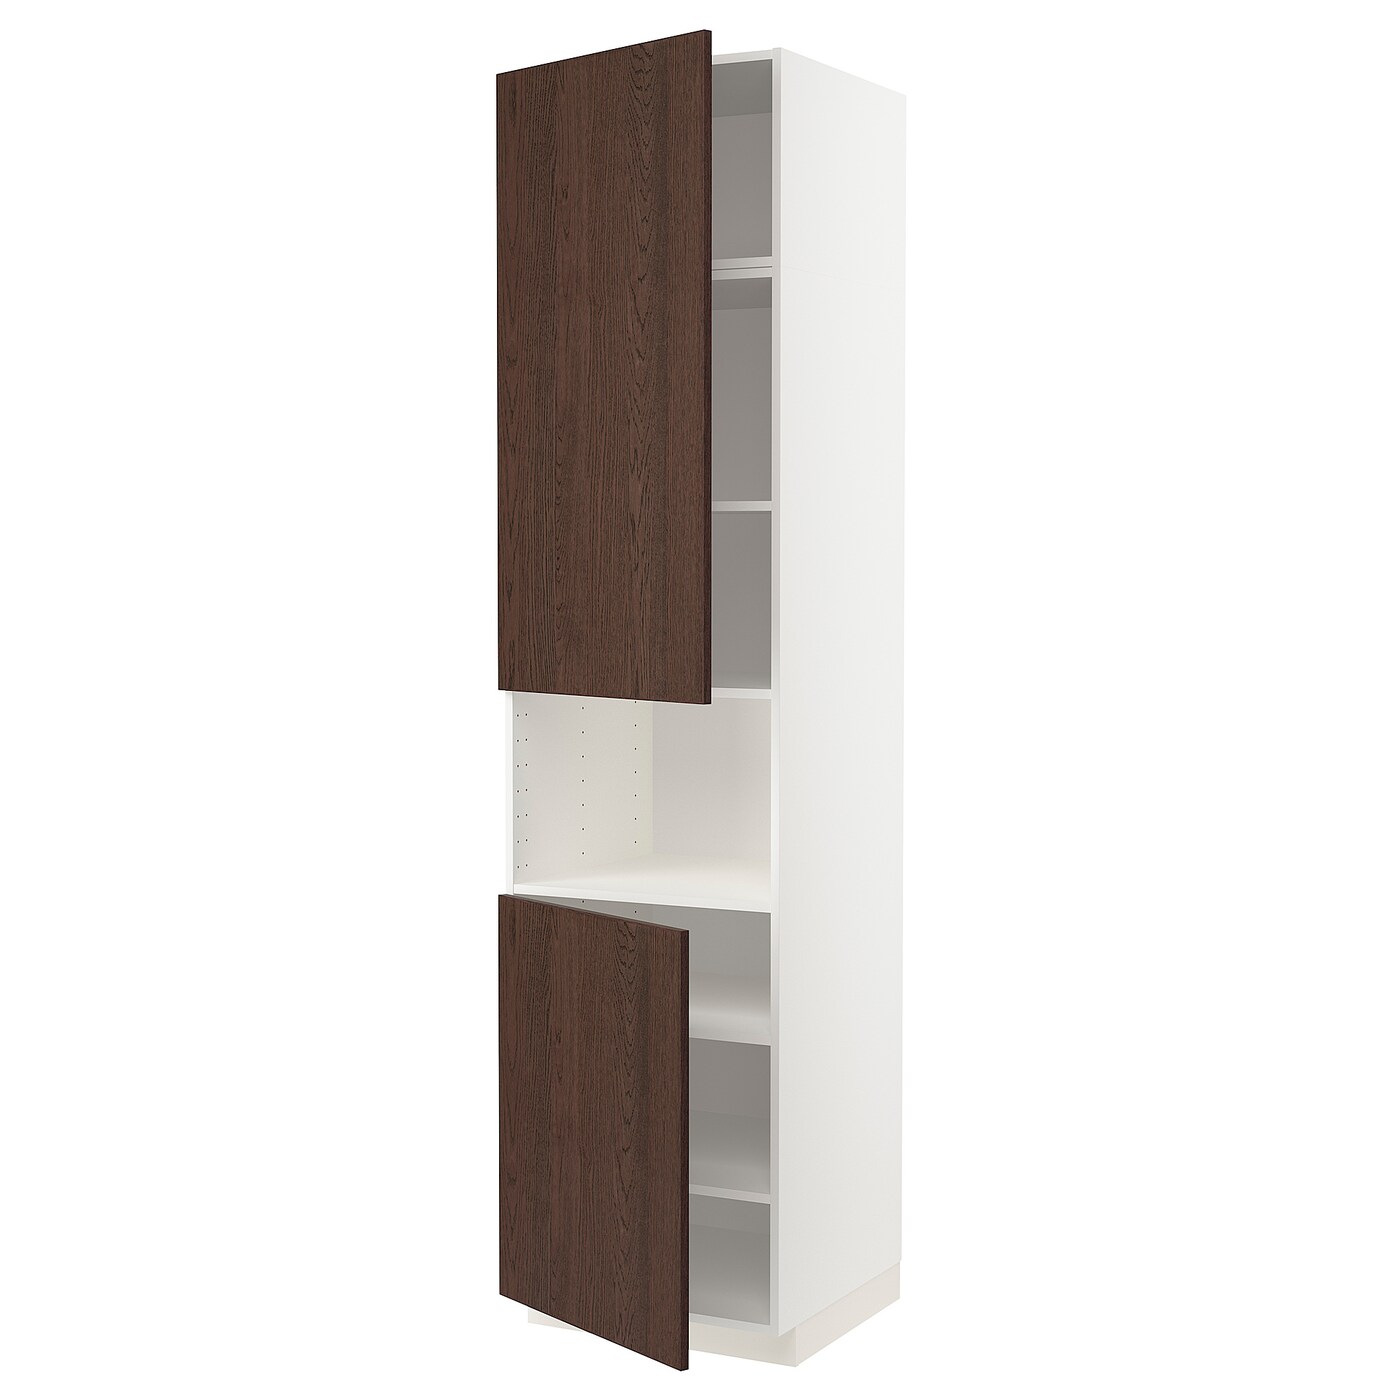 Кухонный шкаф-пенал - IKEA METOD/МЕТОД ИКЕА, 240х60х60 см, белый/коричневый